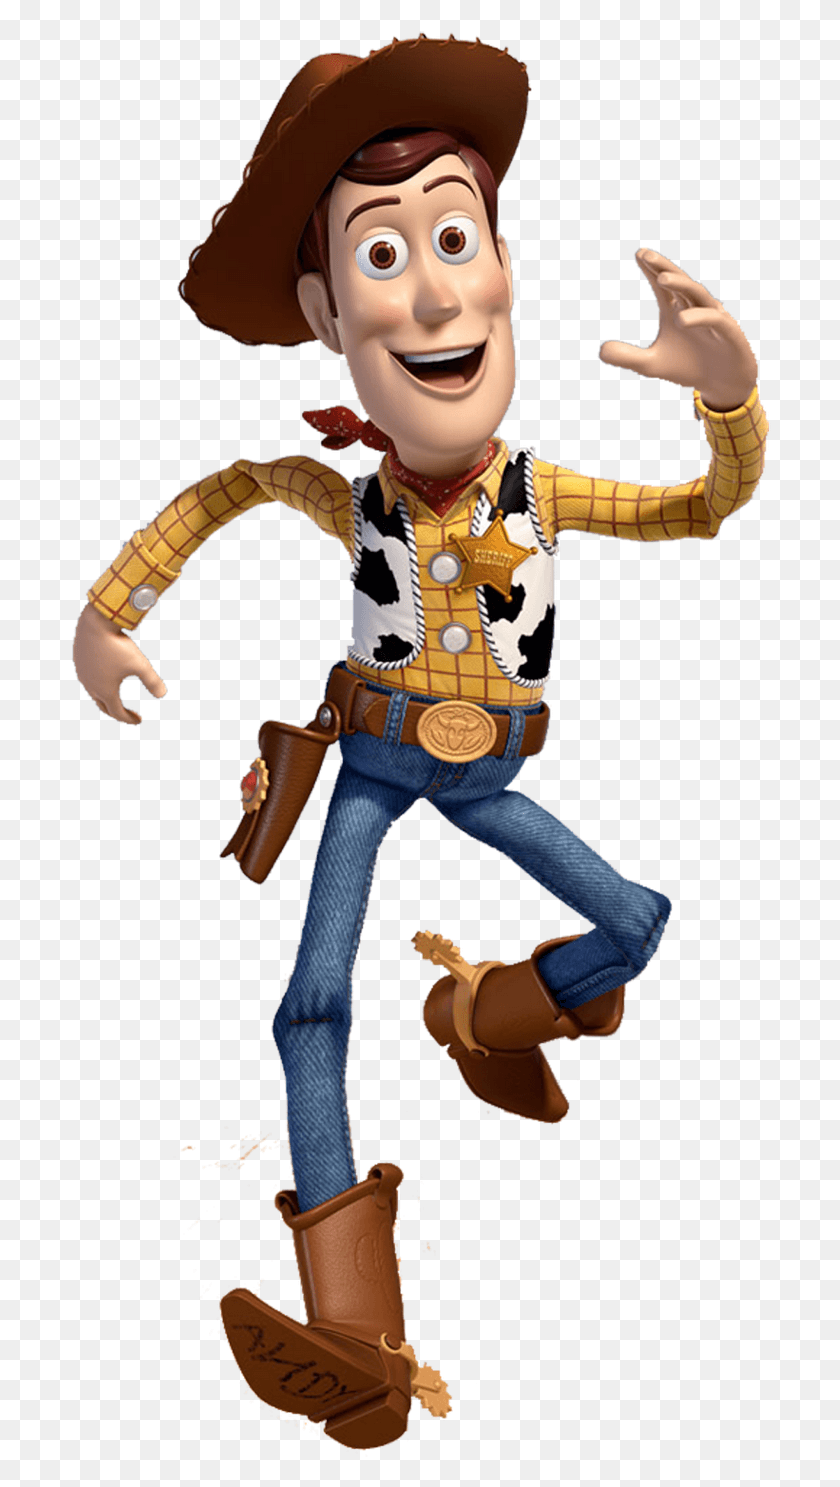 702x1427 Gifs Y Fondos Pazenlatormenta Woody Toy Story Персонажи, Кукла, Игрушка, Человек Hd Png Скачать